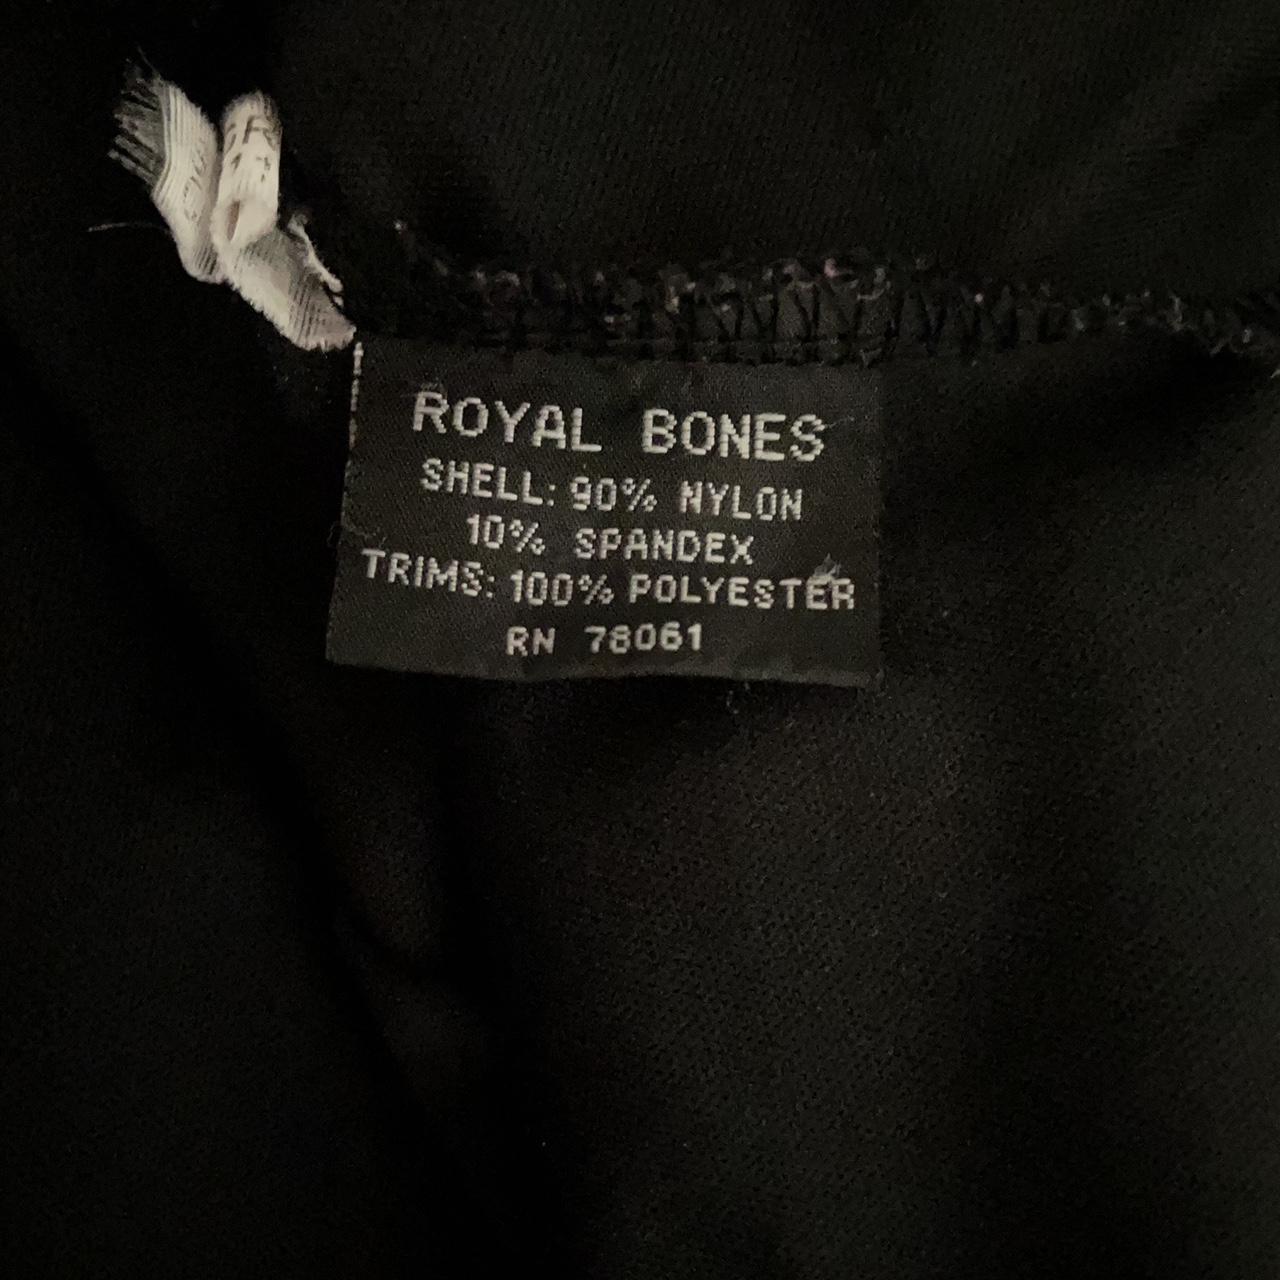 Royal Bones By Tripp Black Lace Dress There is no - Depop